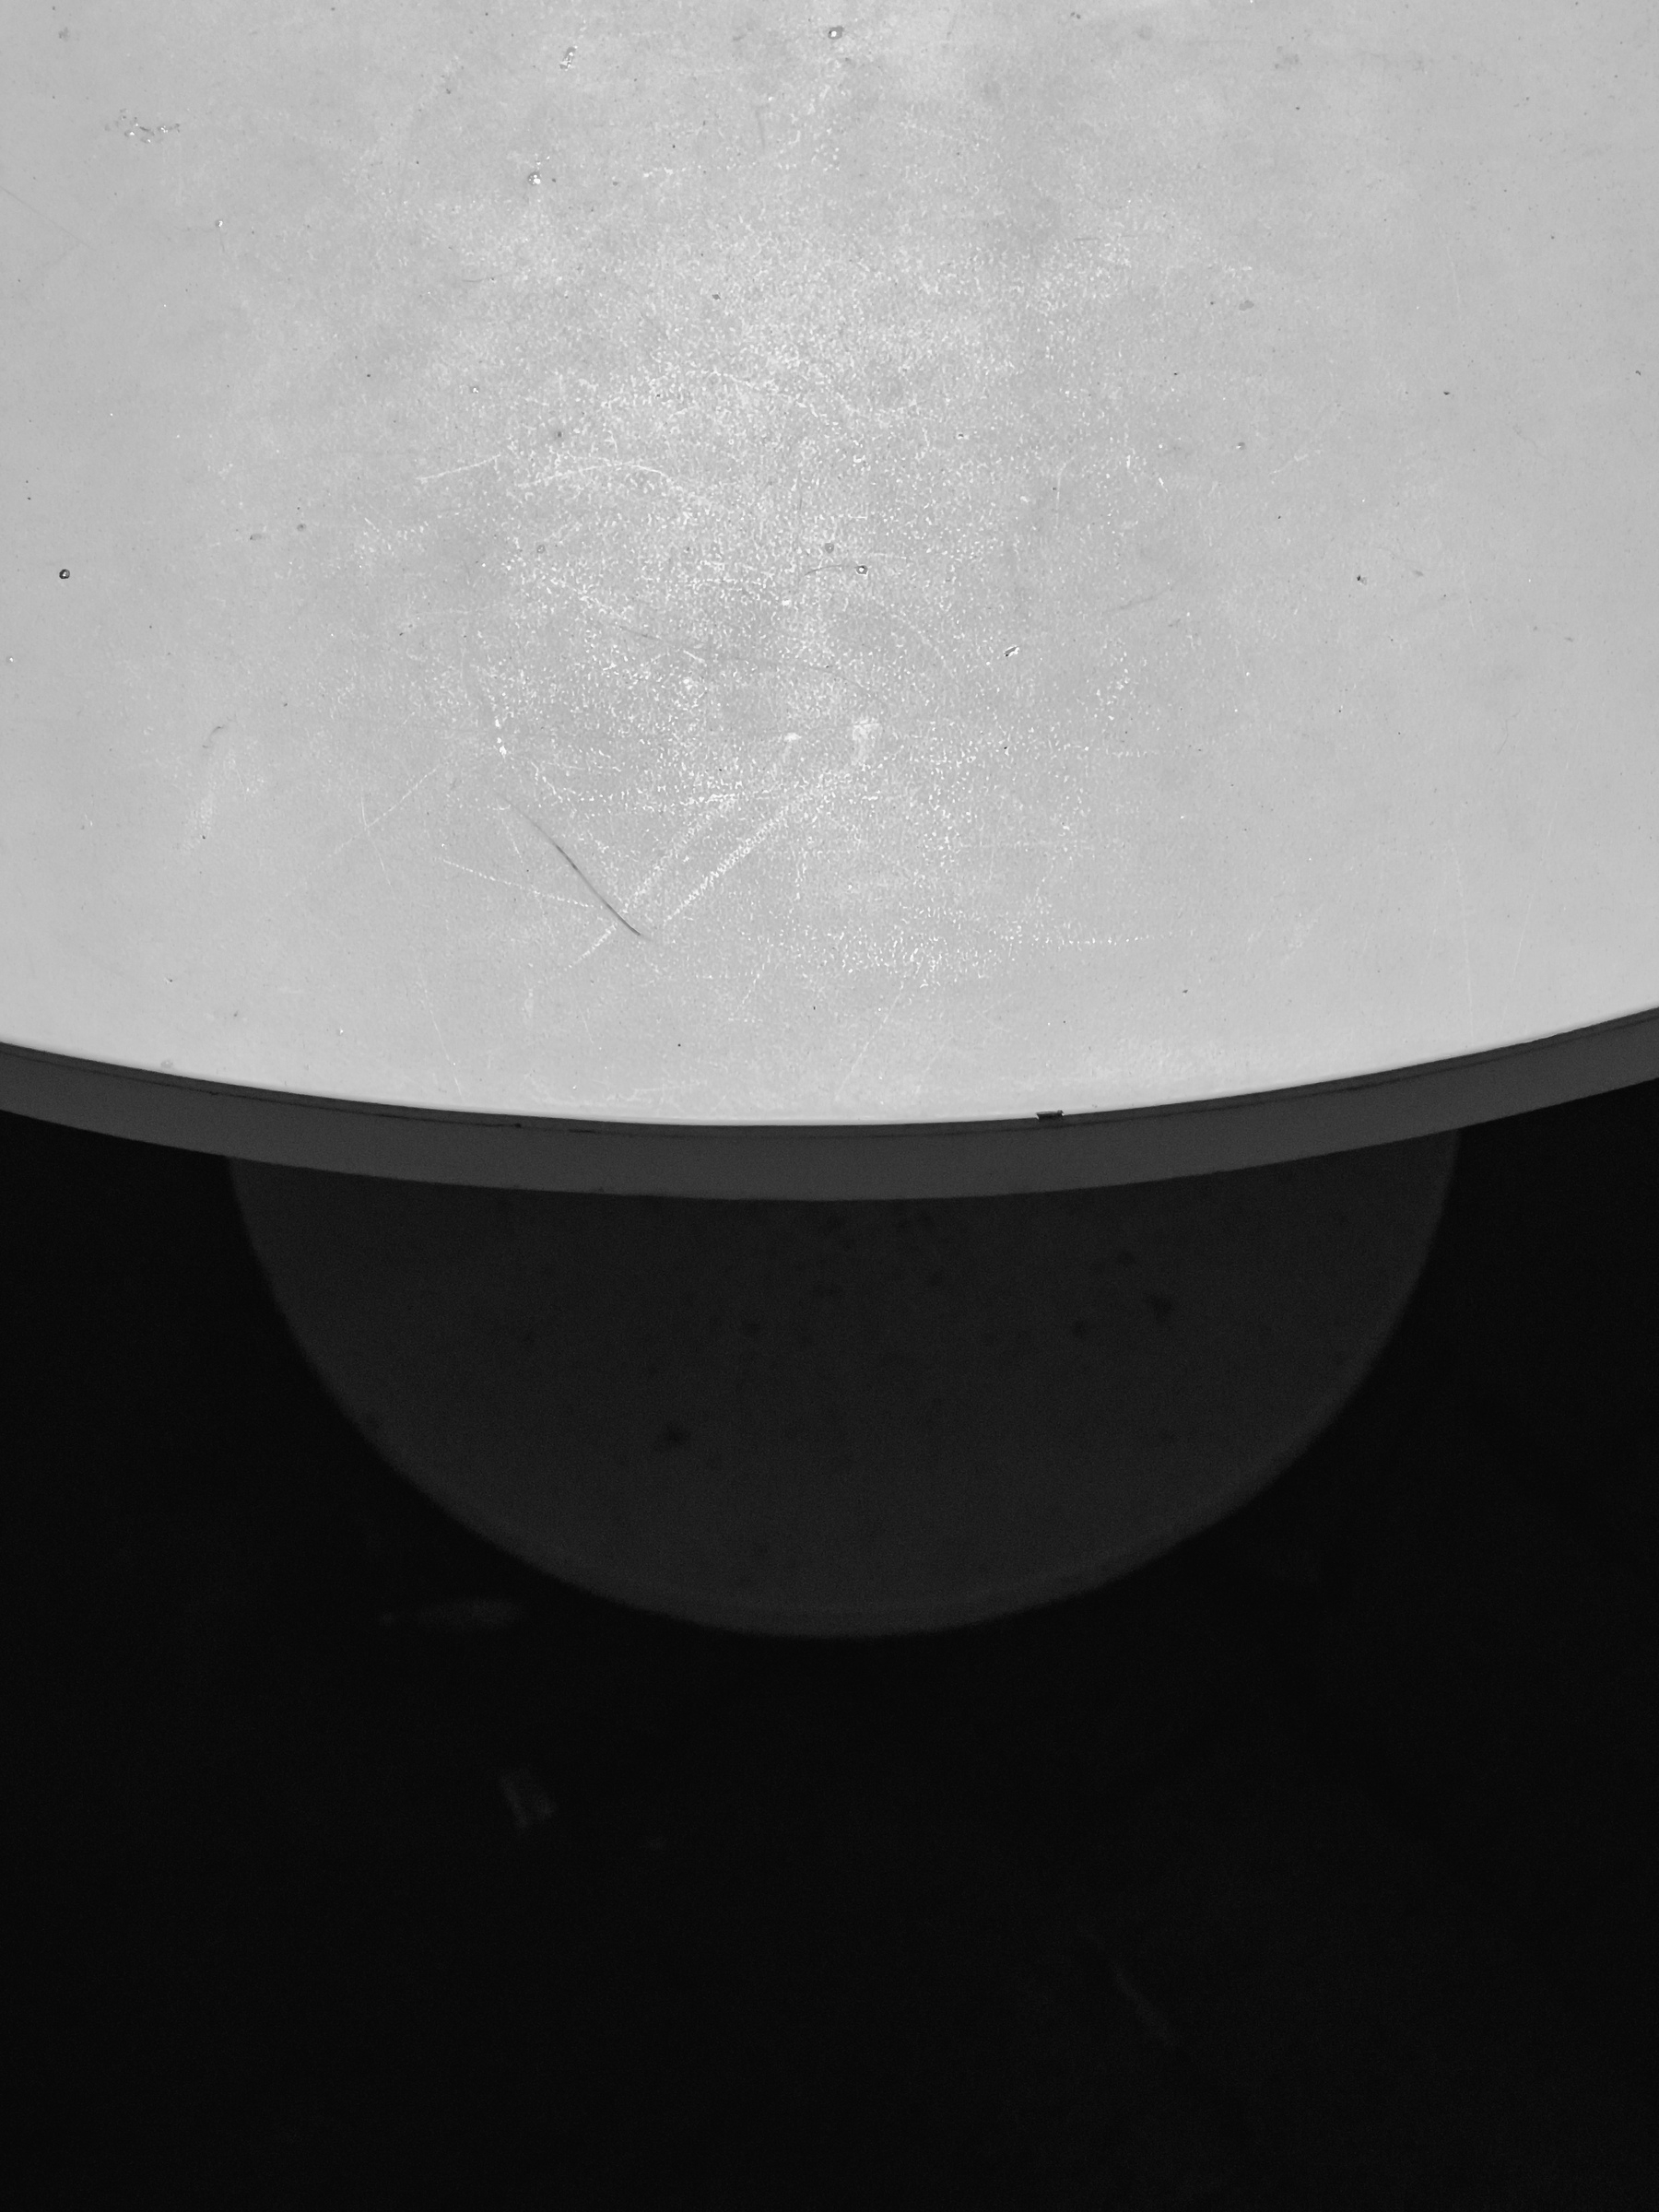 Closeup of edge of circular table with circular base in shadow below.